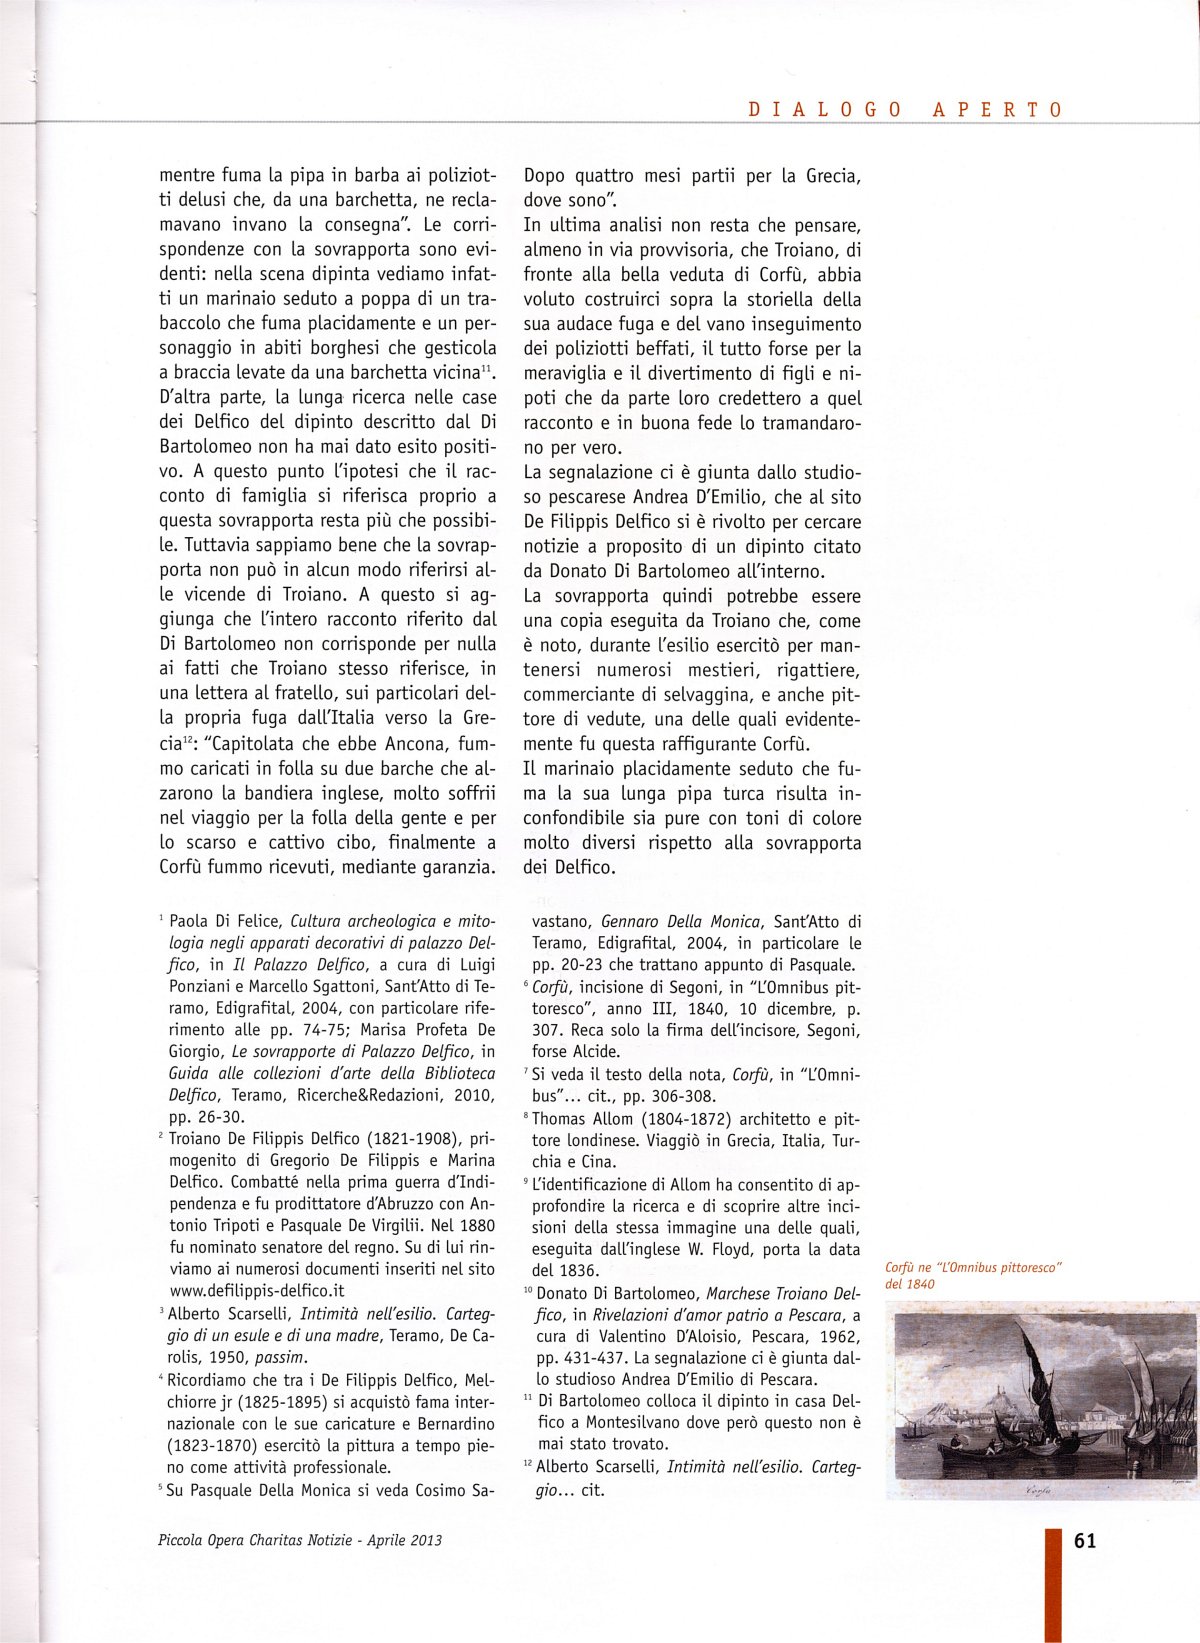 Piccola Opera Charitas, anno XIII, n. 1, gennaio-aprile 2013, pag. 61